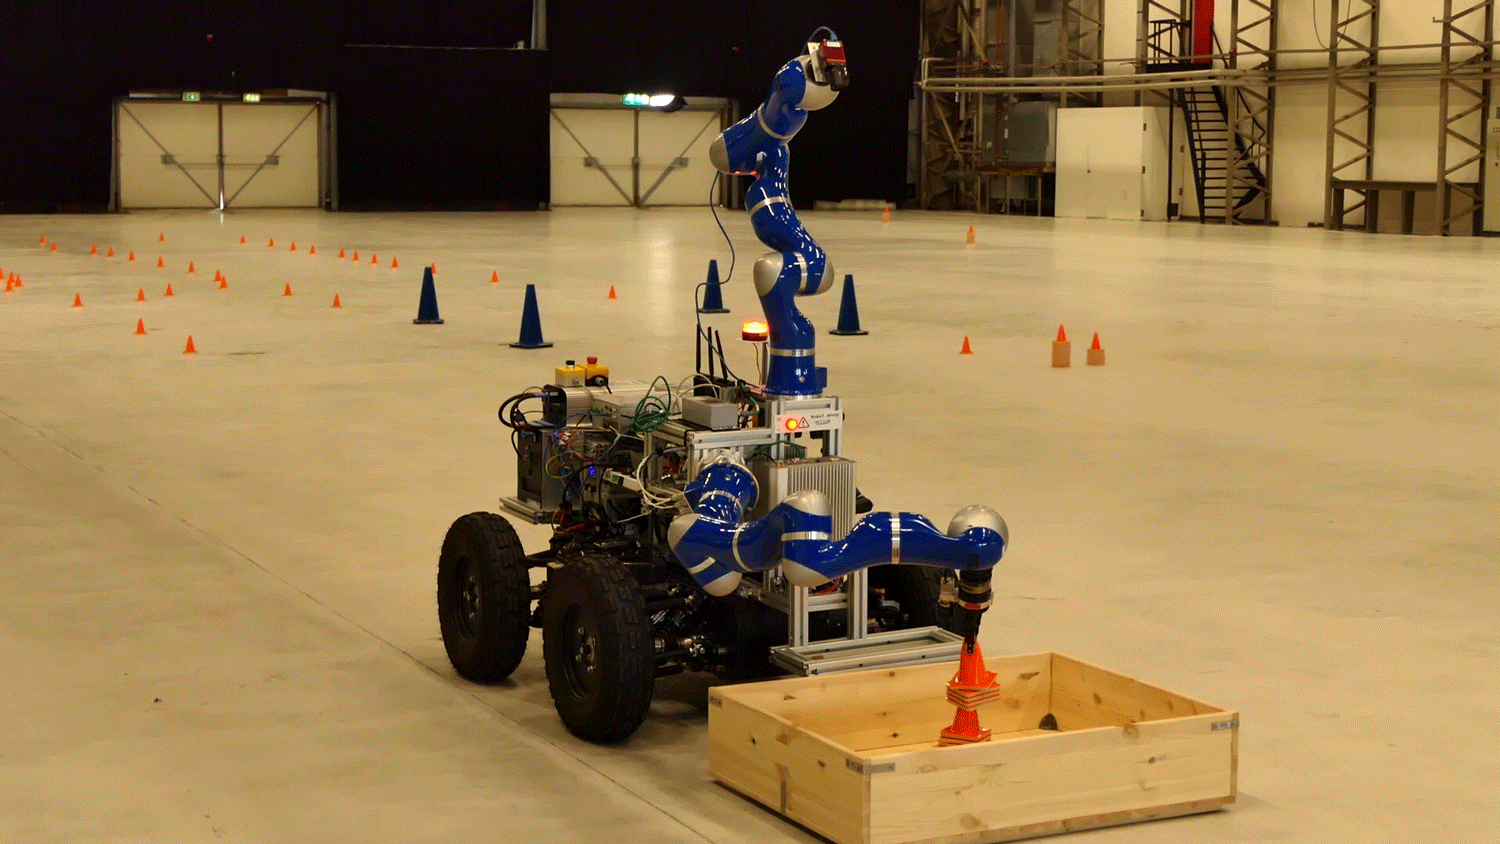 NASA remote controlled lunar rover prototype